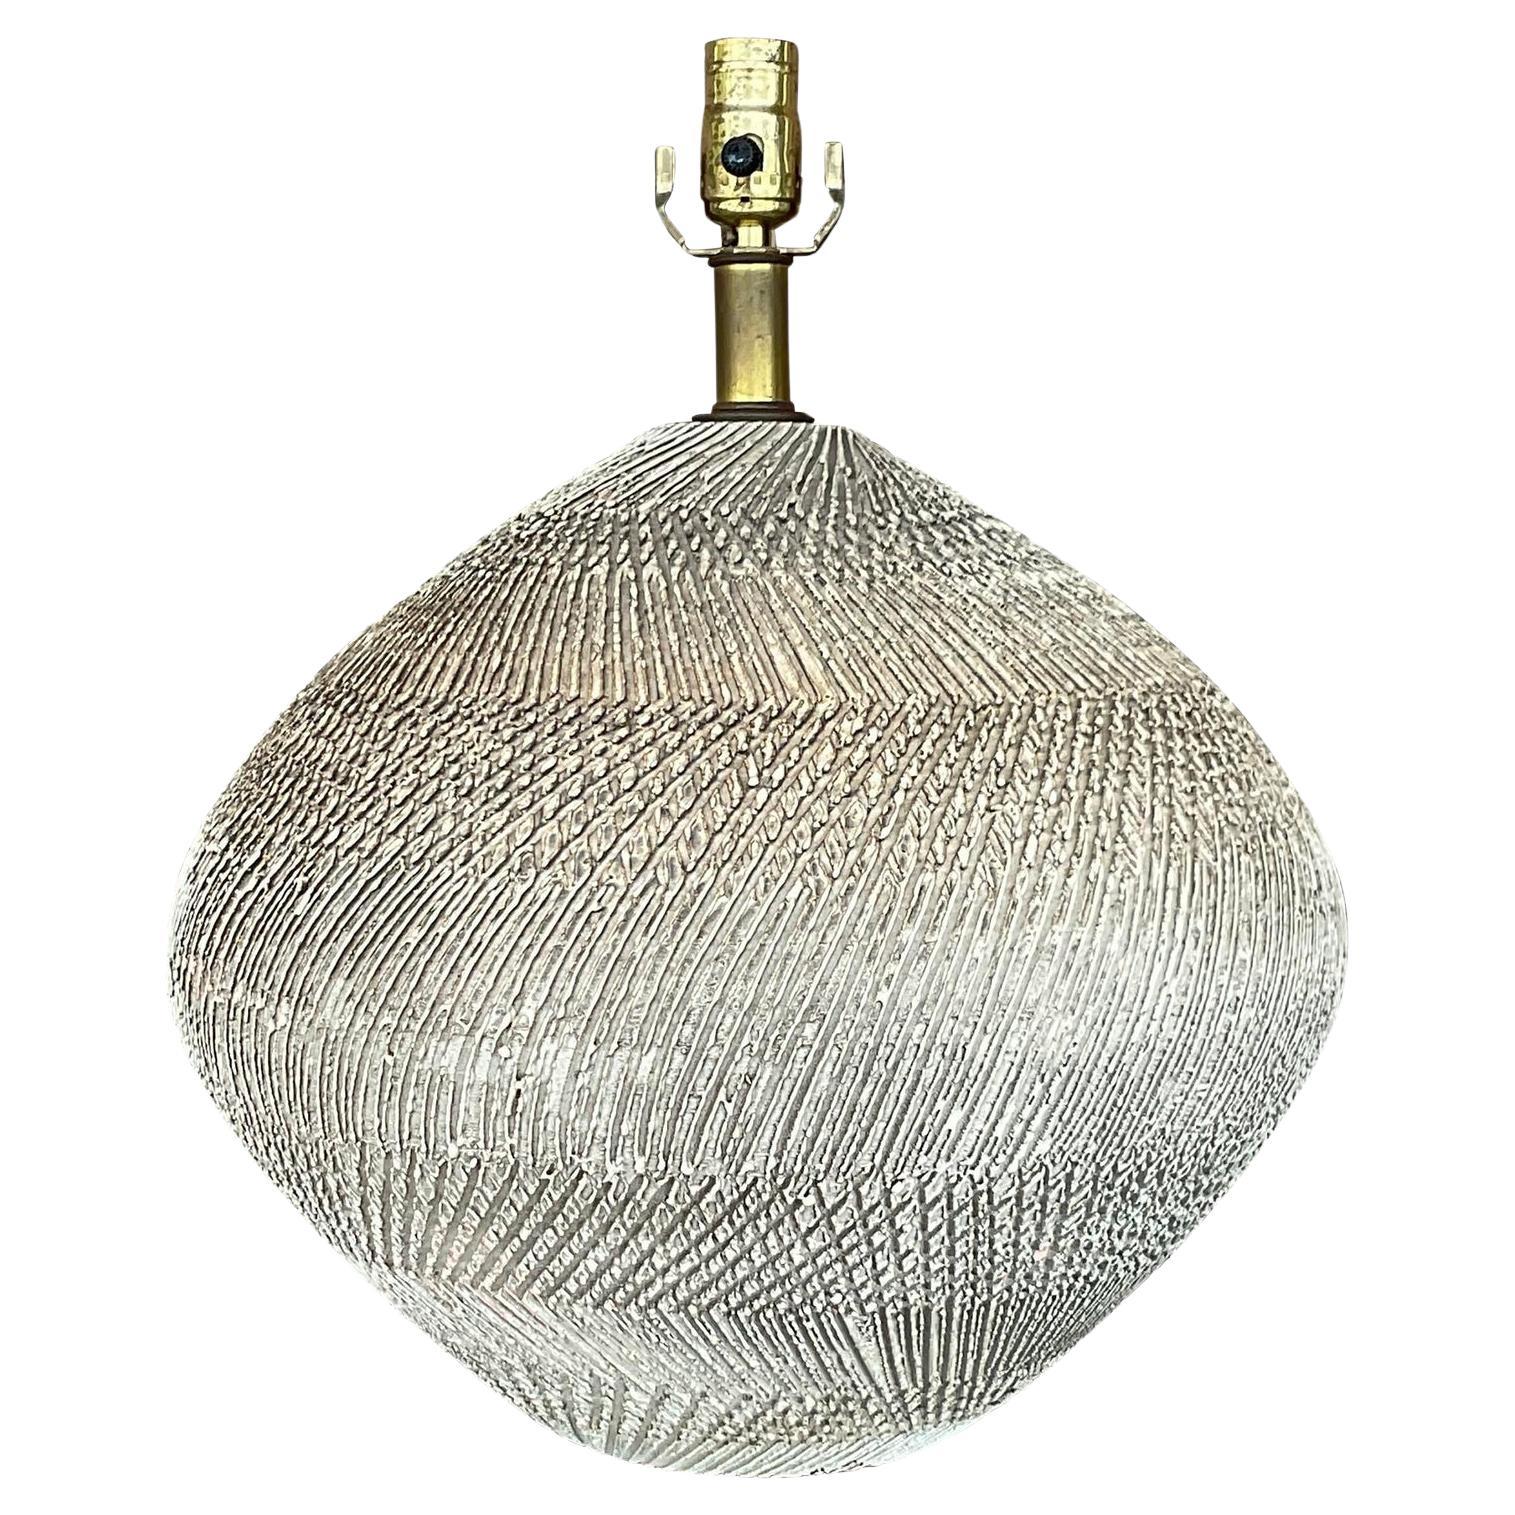 Vintage Boho Scored Ceramic Lamp